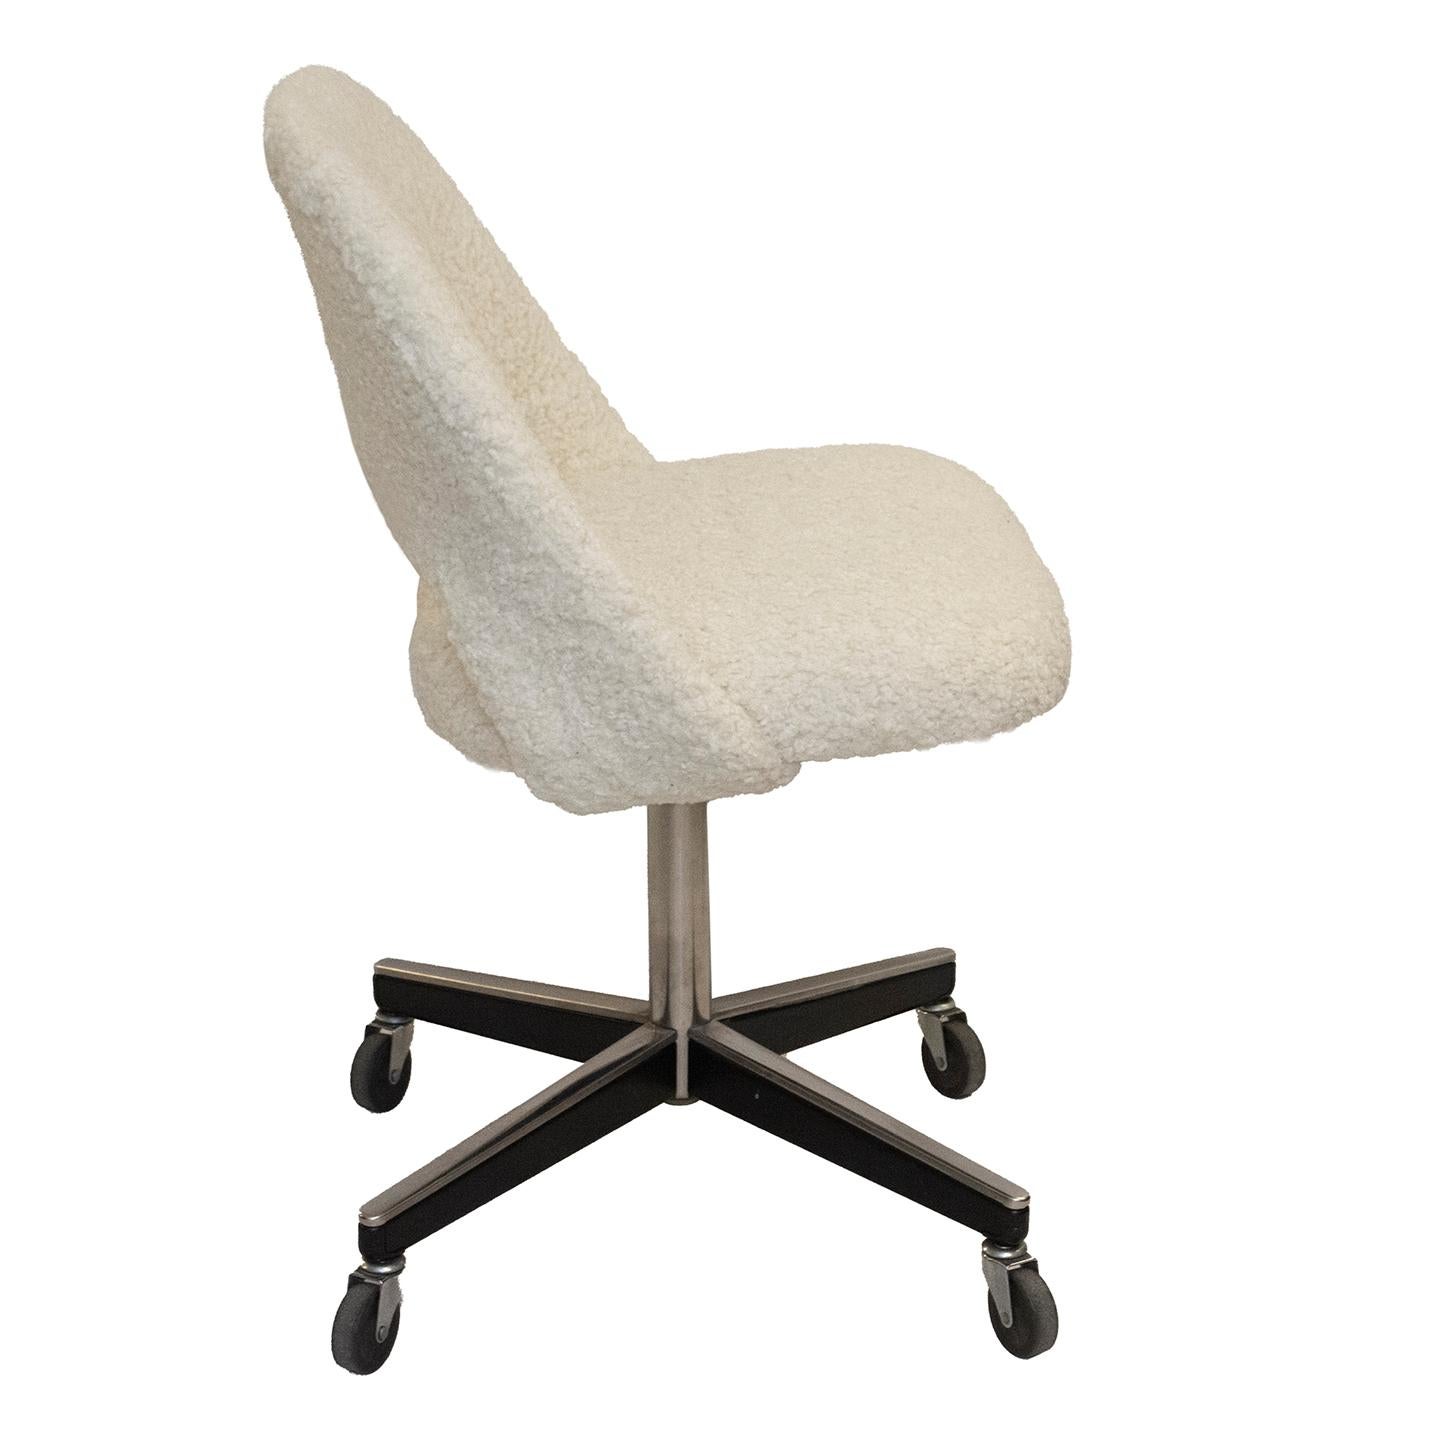 Mid-Century Modern Vintage Knoll Saarinen Desk Swivel Chair Upholstered in White Faux Shearling